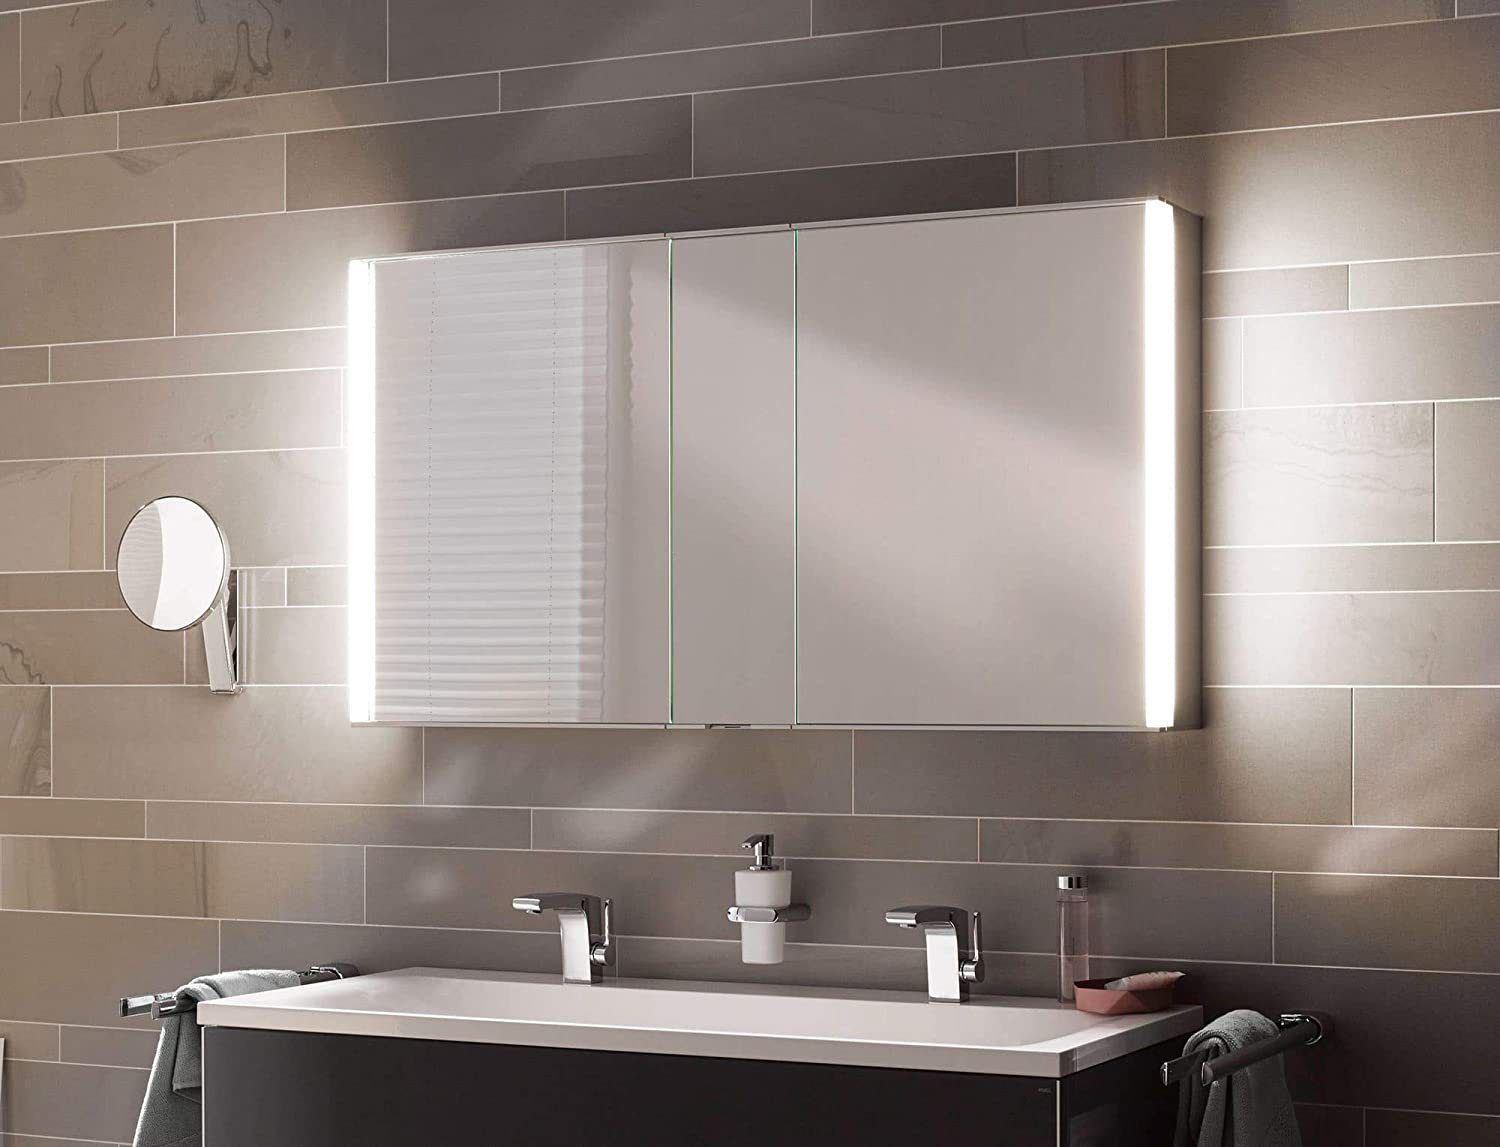 Keuco Spiegelschrank Royal Match (Badezimmerspiegelschrank mit Beleuchtung  LED), mit Steckdose, dimmbar, Aluminium-Korpus, 2-türig, 130 cm breit